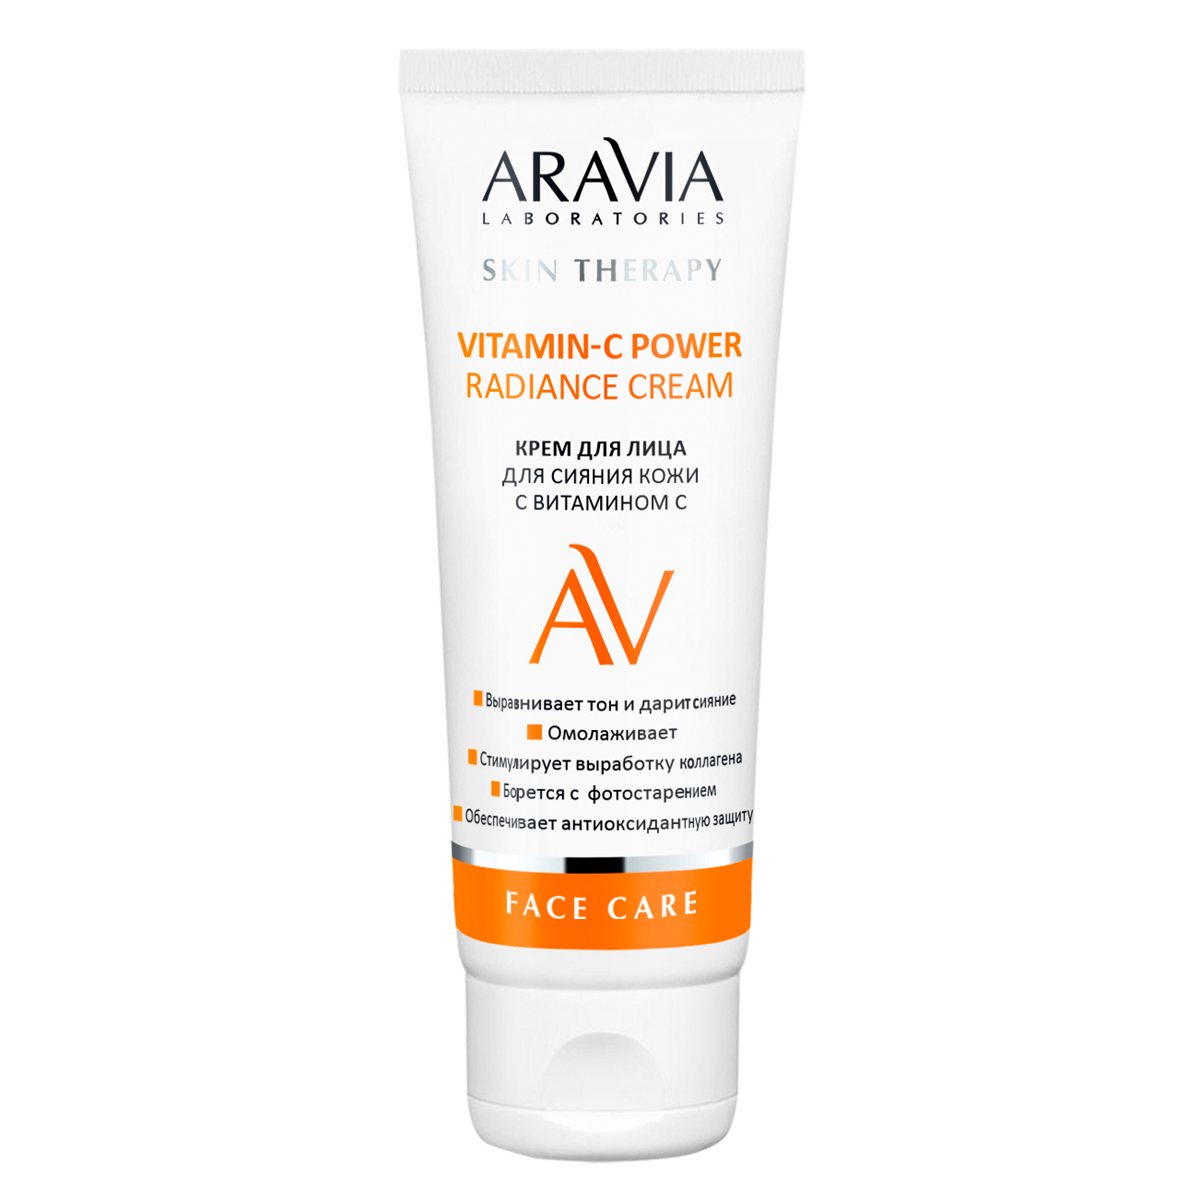 Aravia Laboratories Крем для лица для сияния кожи с витамино